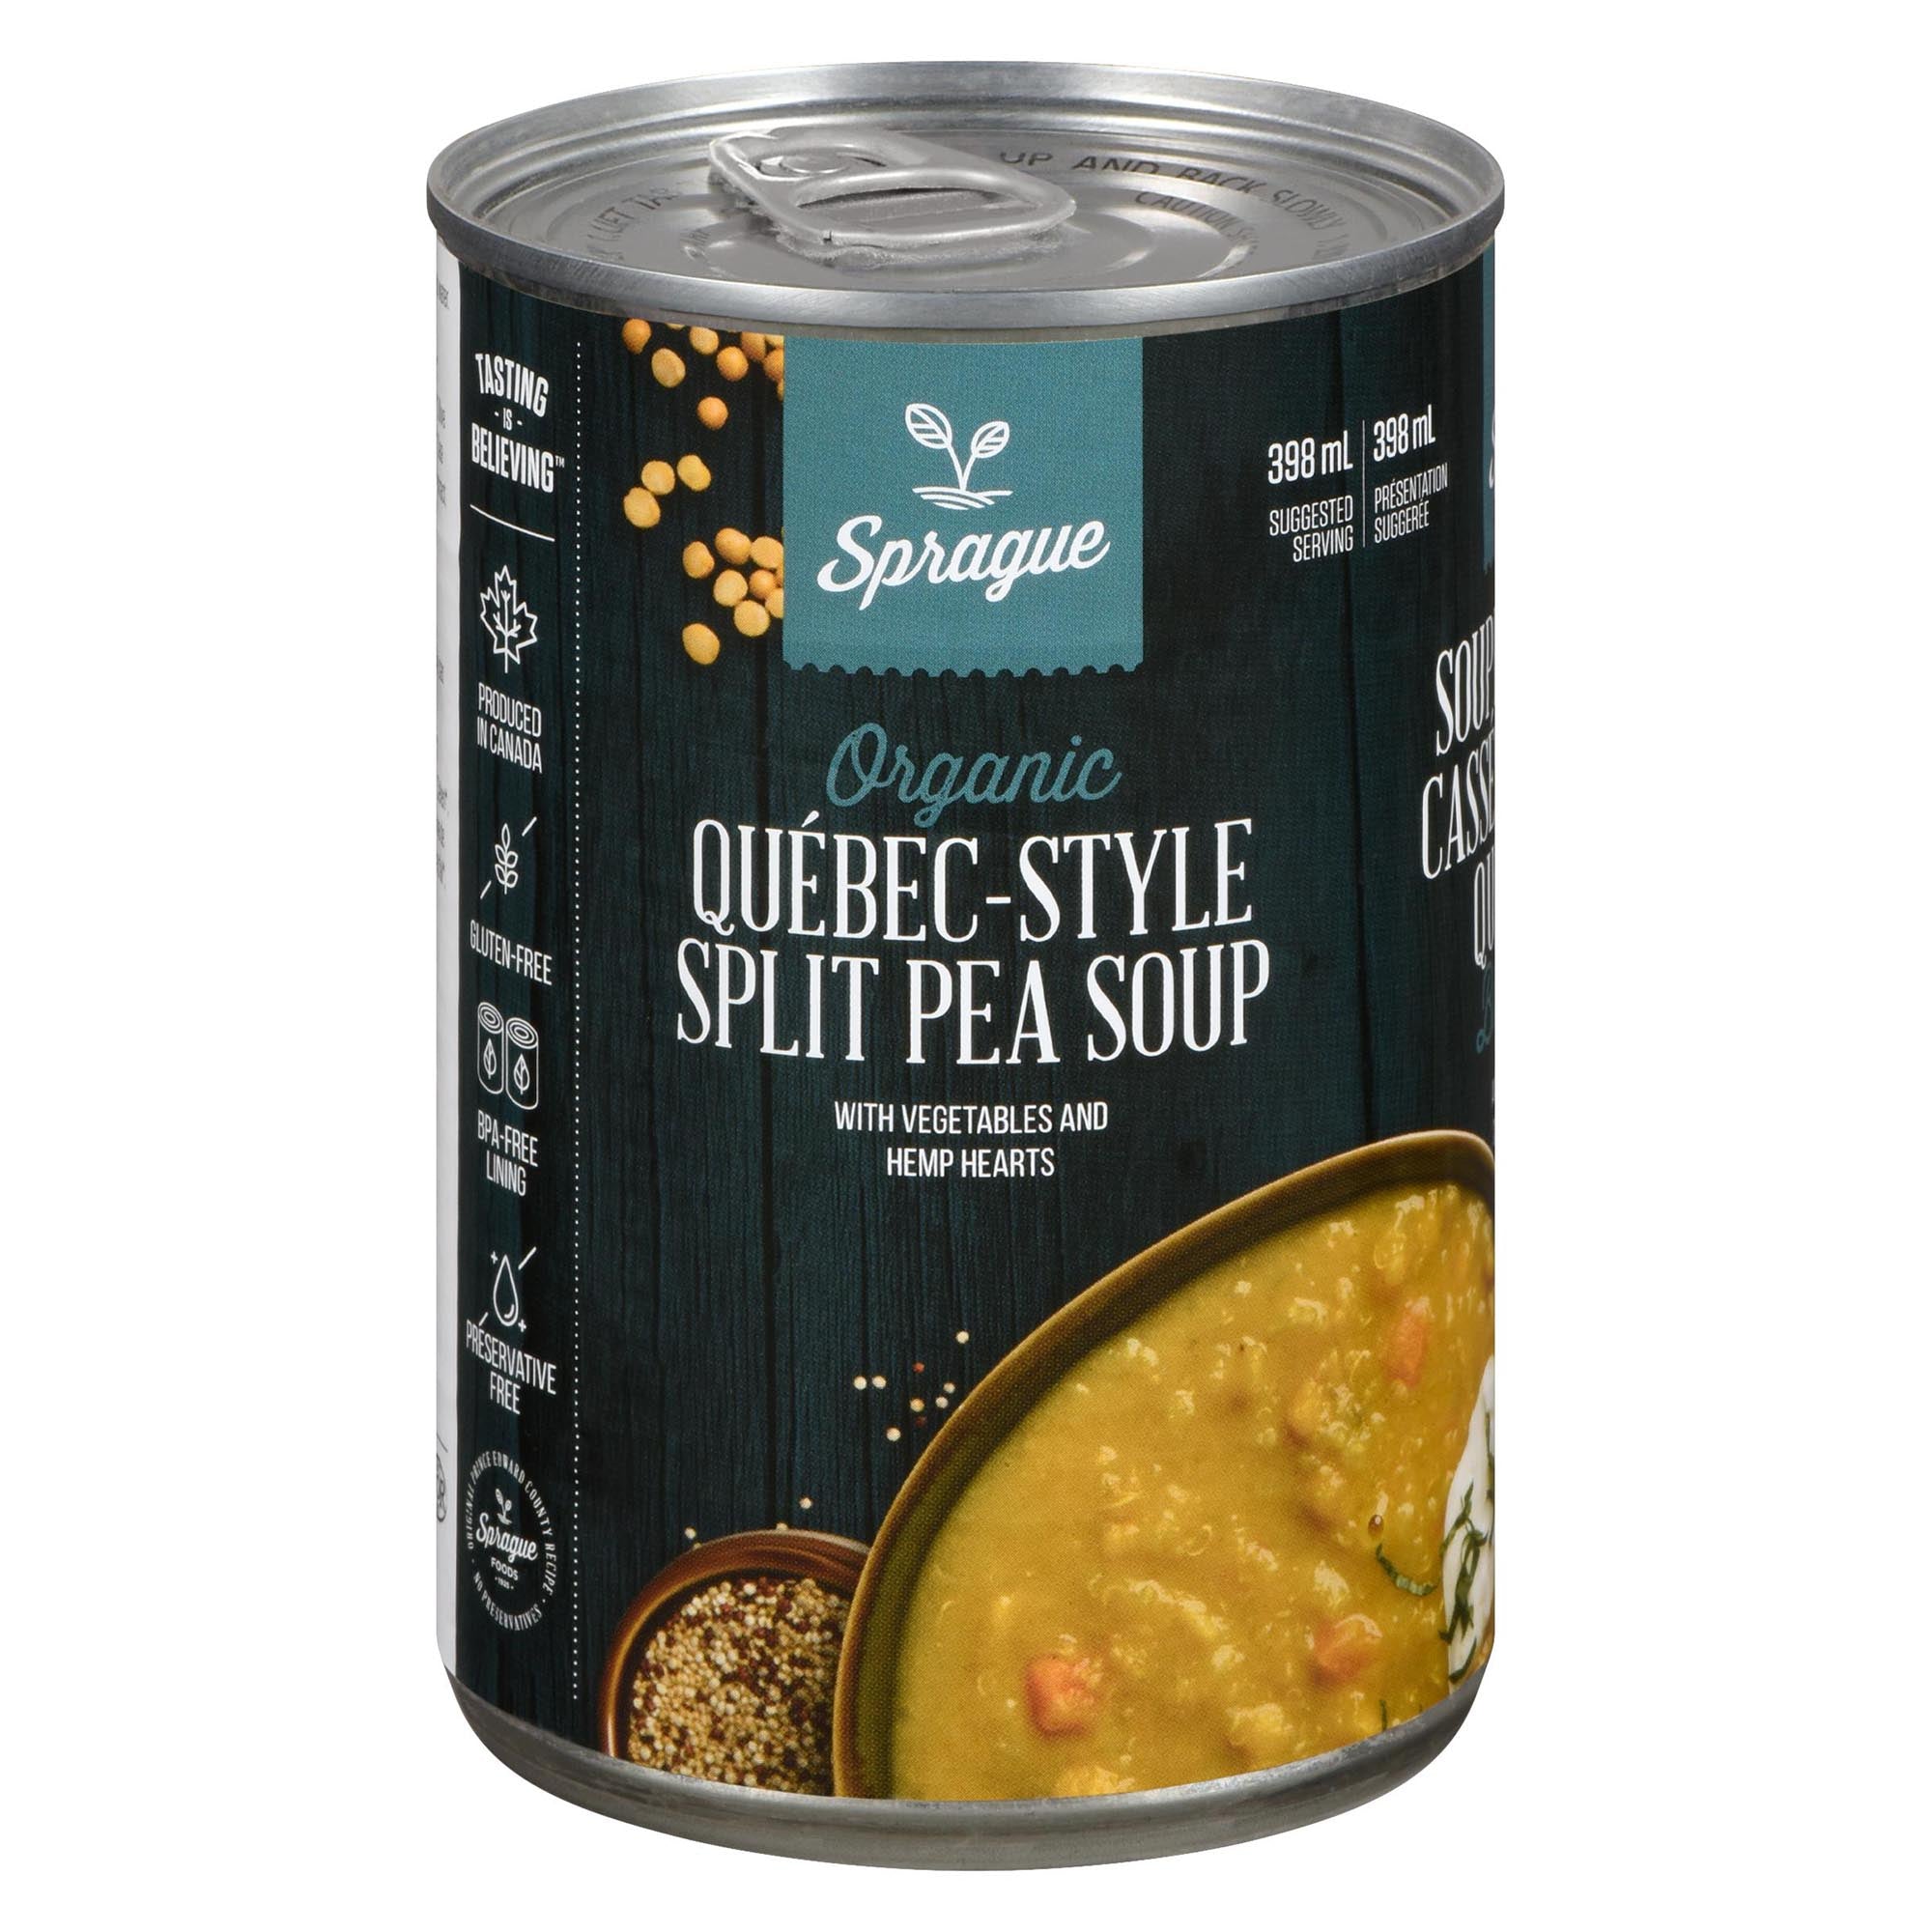 Sprague Organic Soup, Canadian Style Split Pea